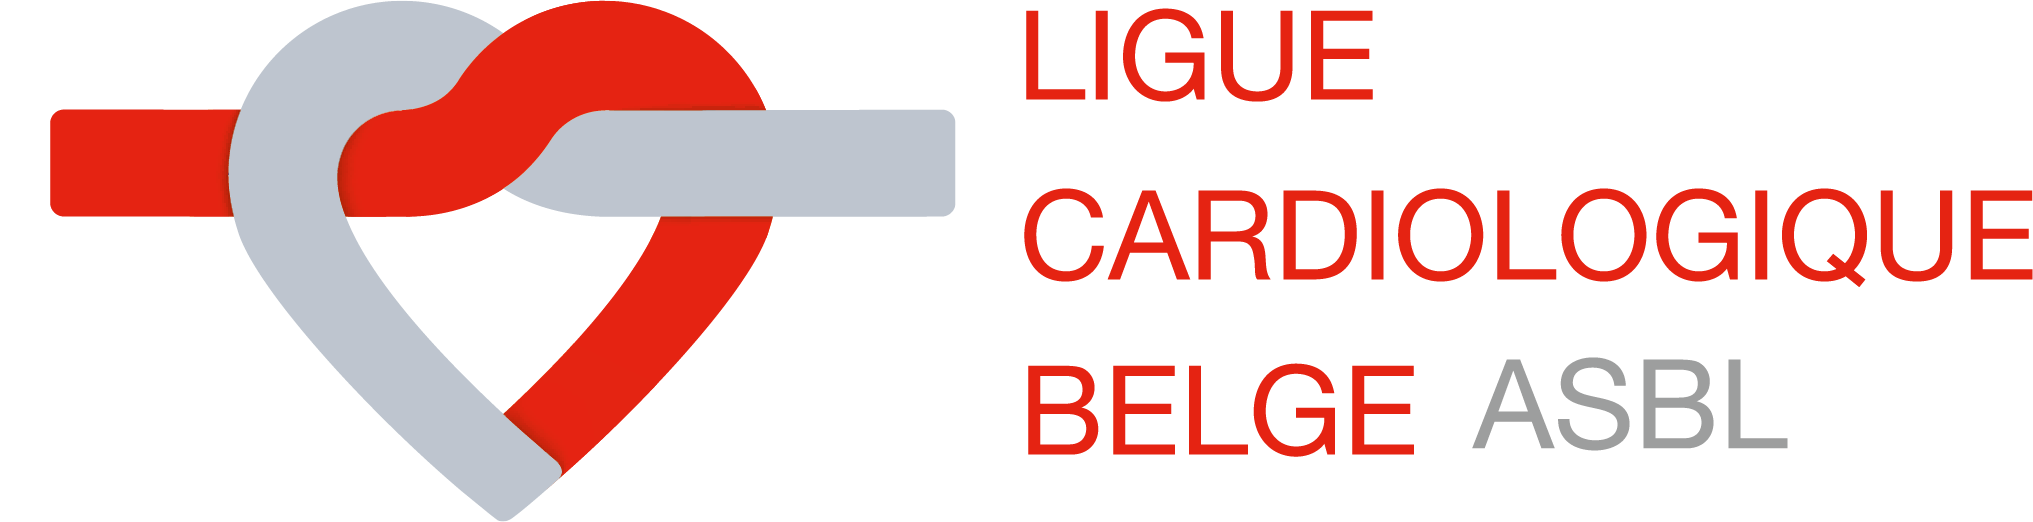 Ligue Cardiologique Belge 